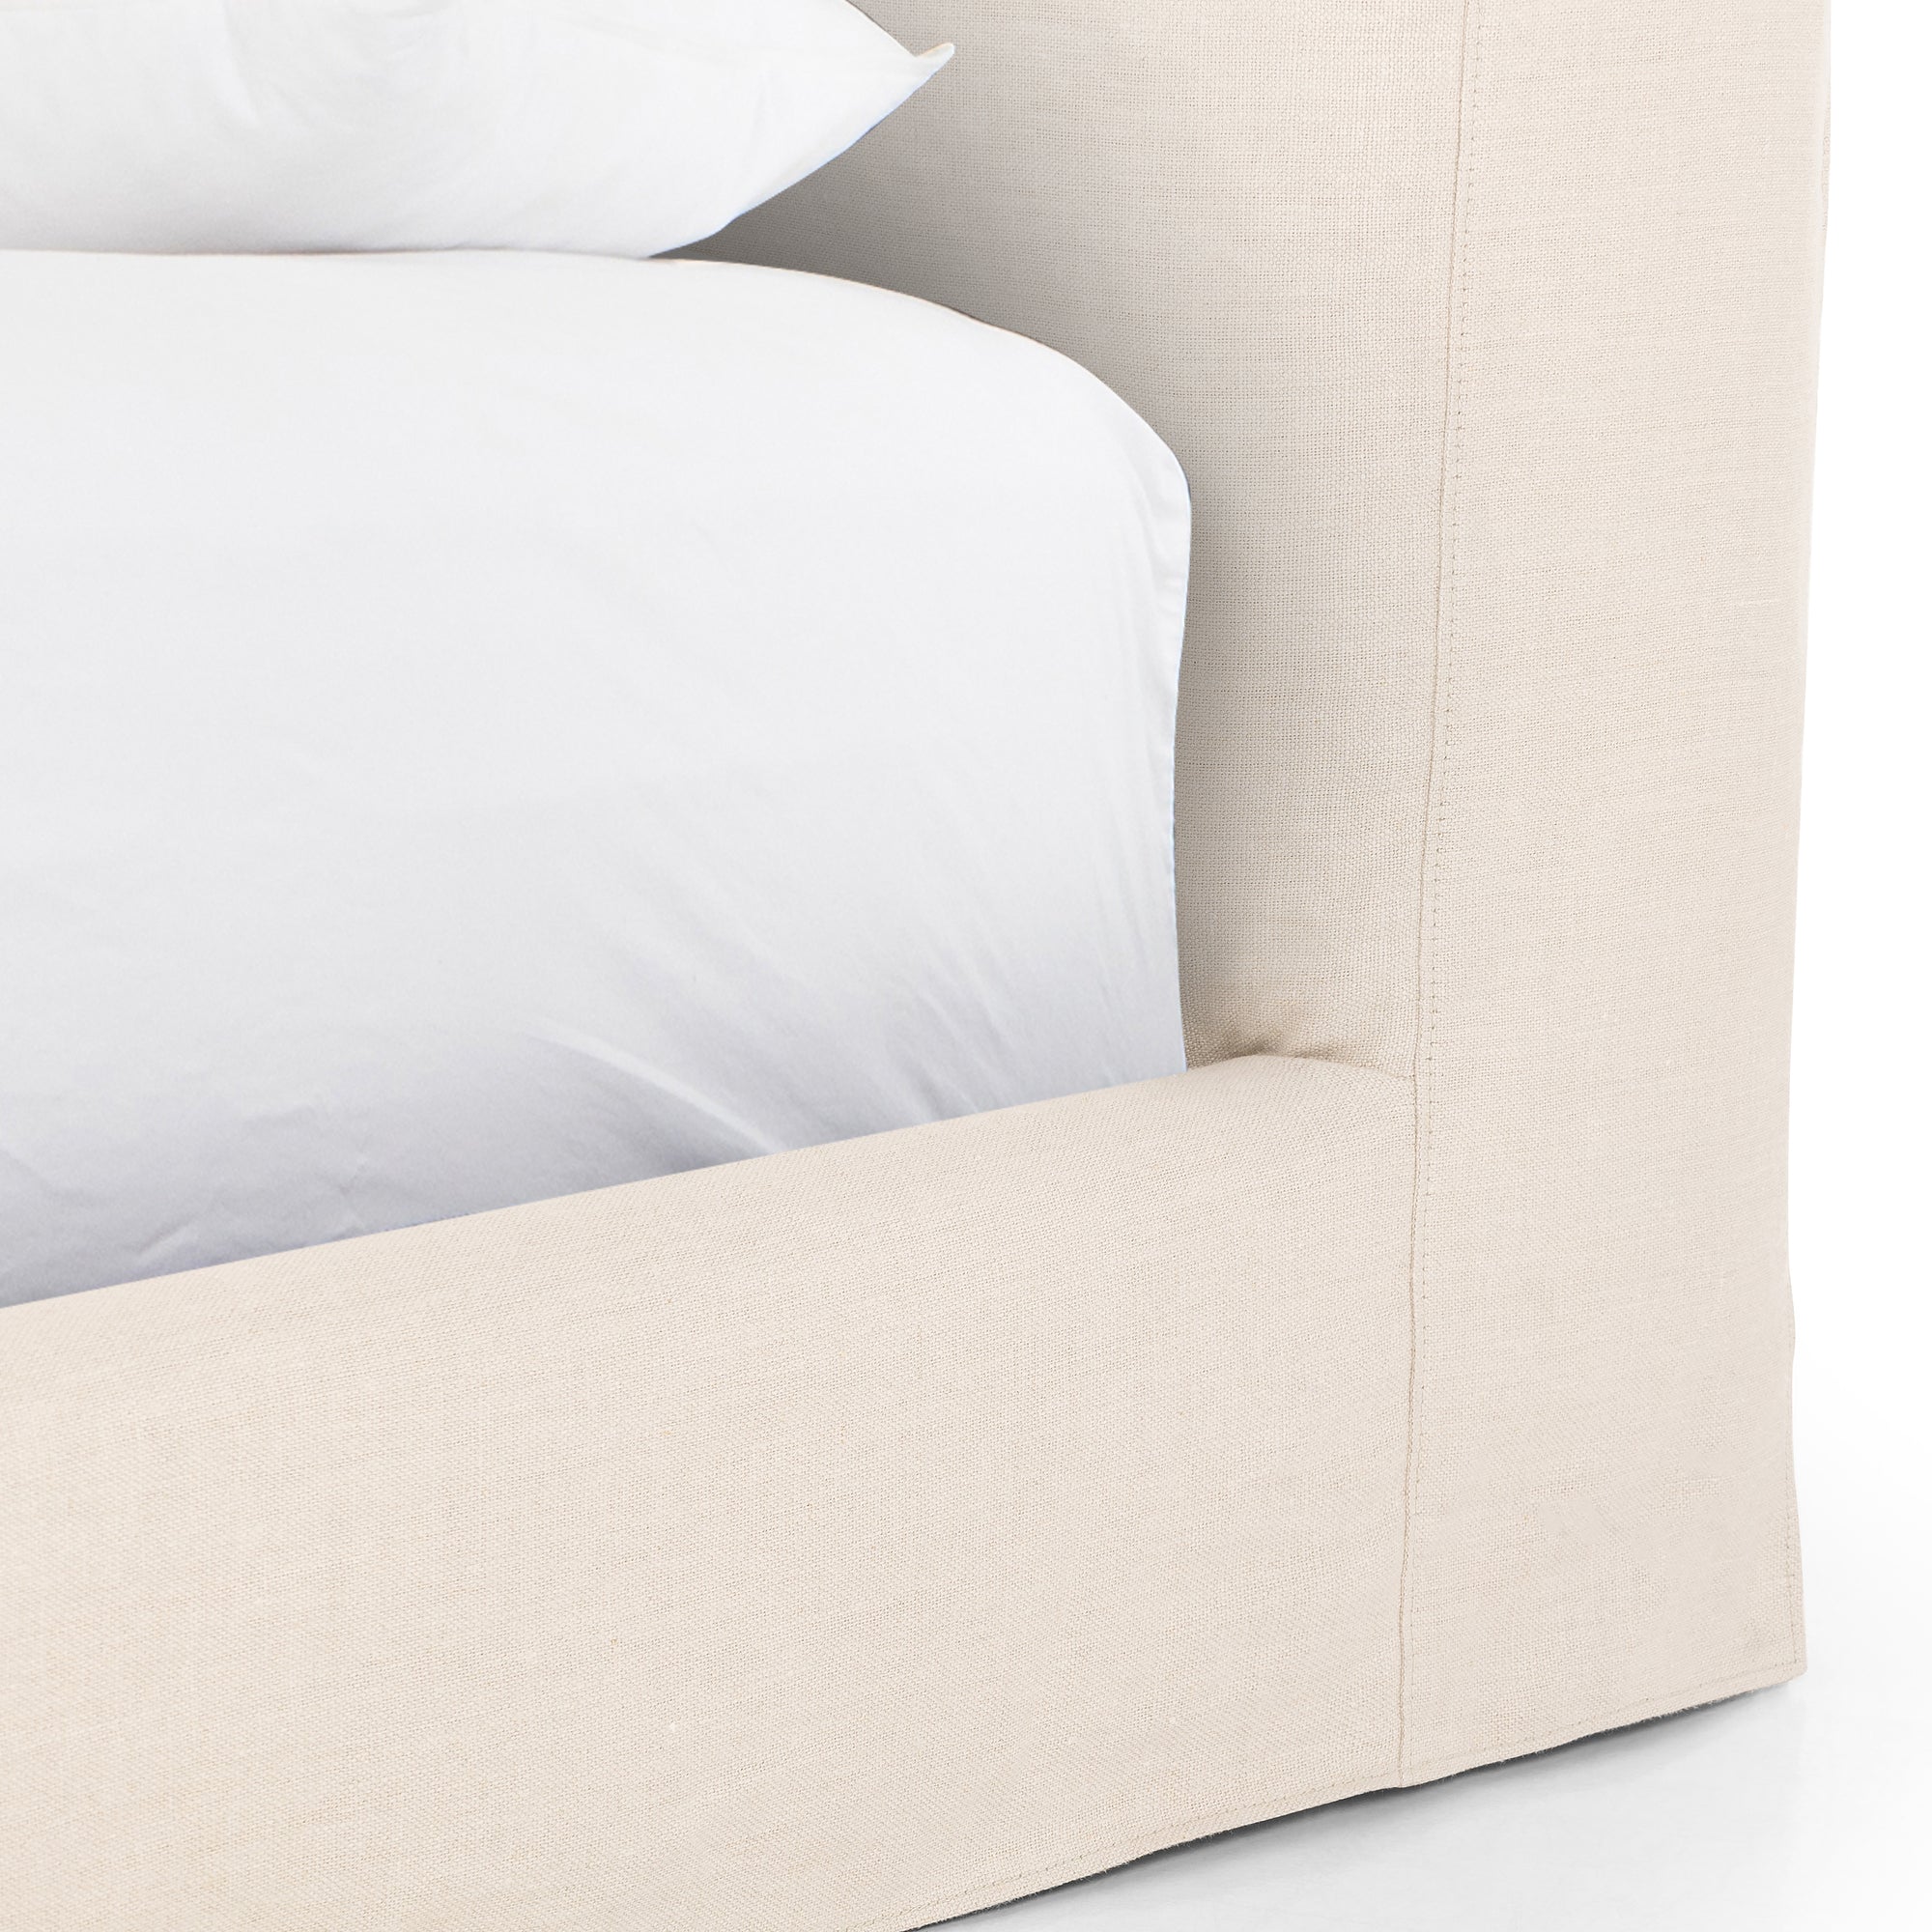 Aidan Slipcover Bed - StyleMeGHD - Beds + Headboards